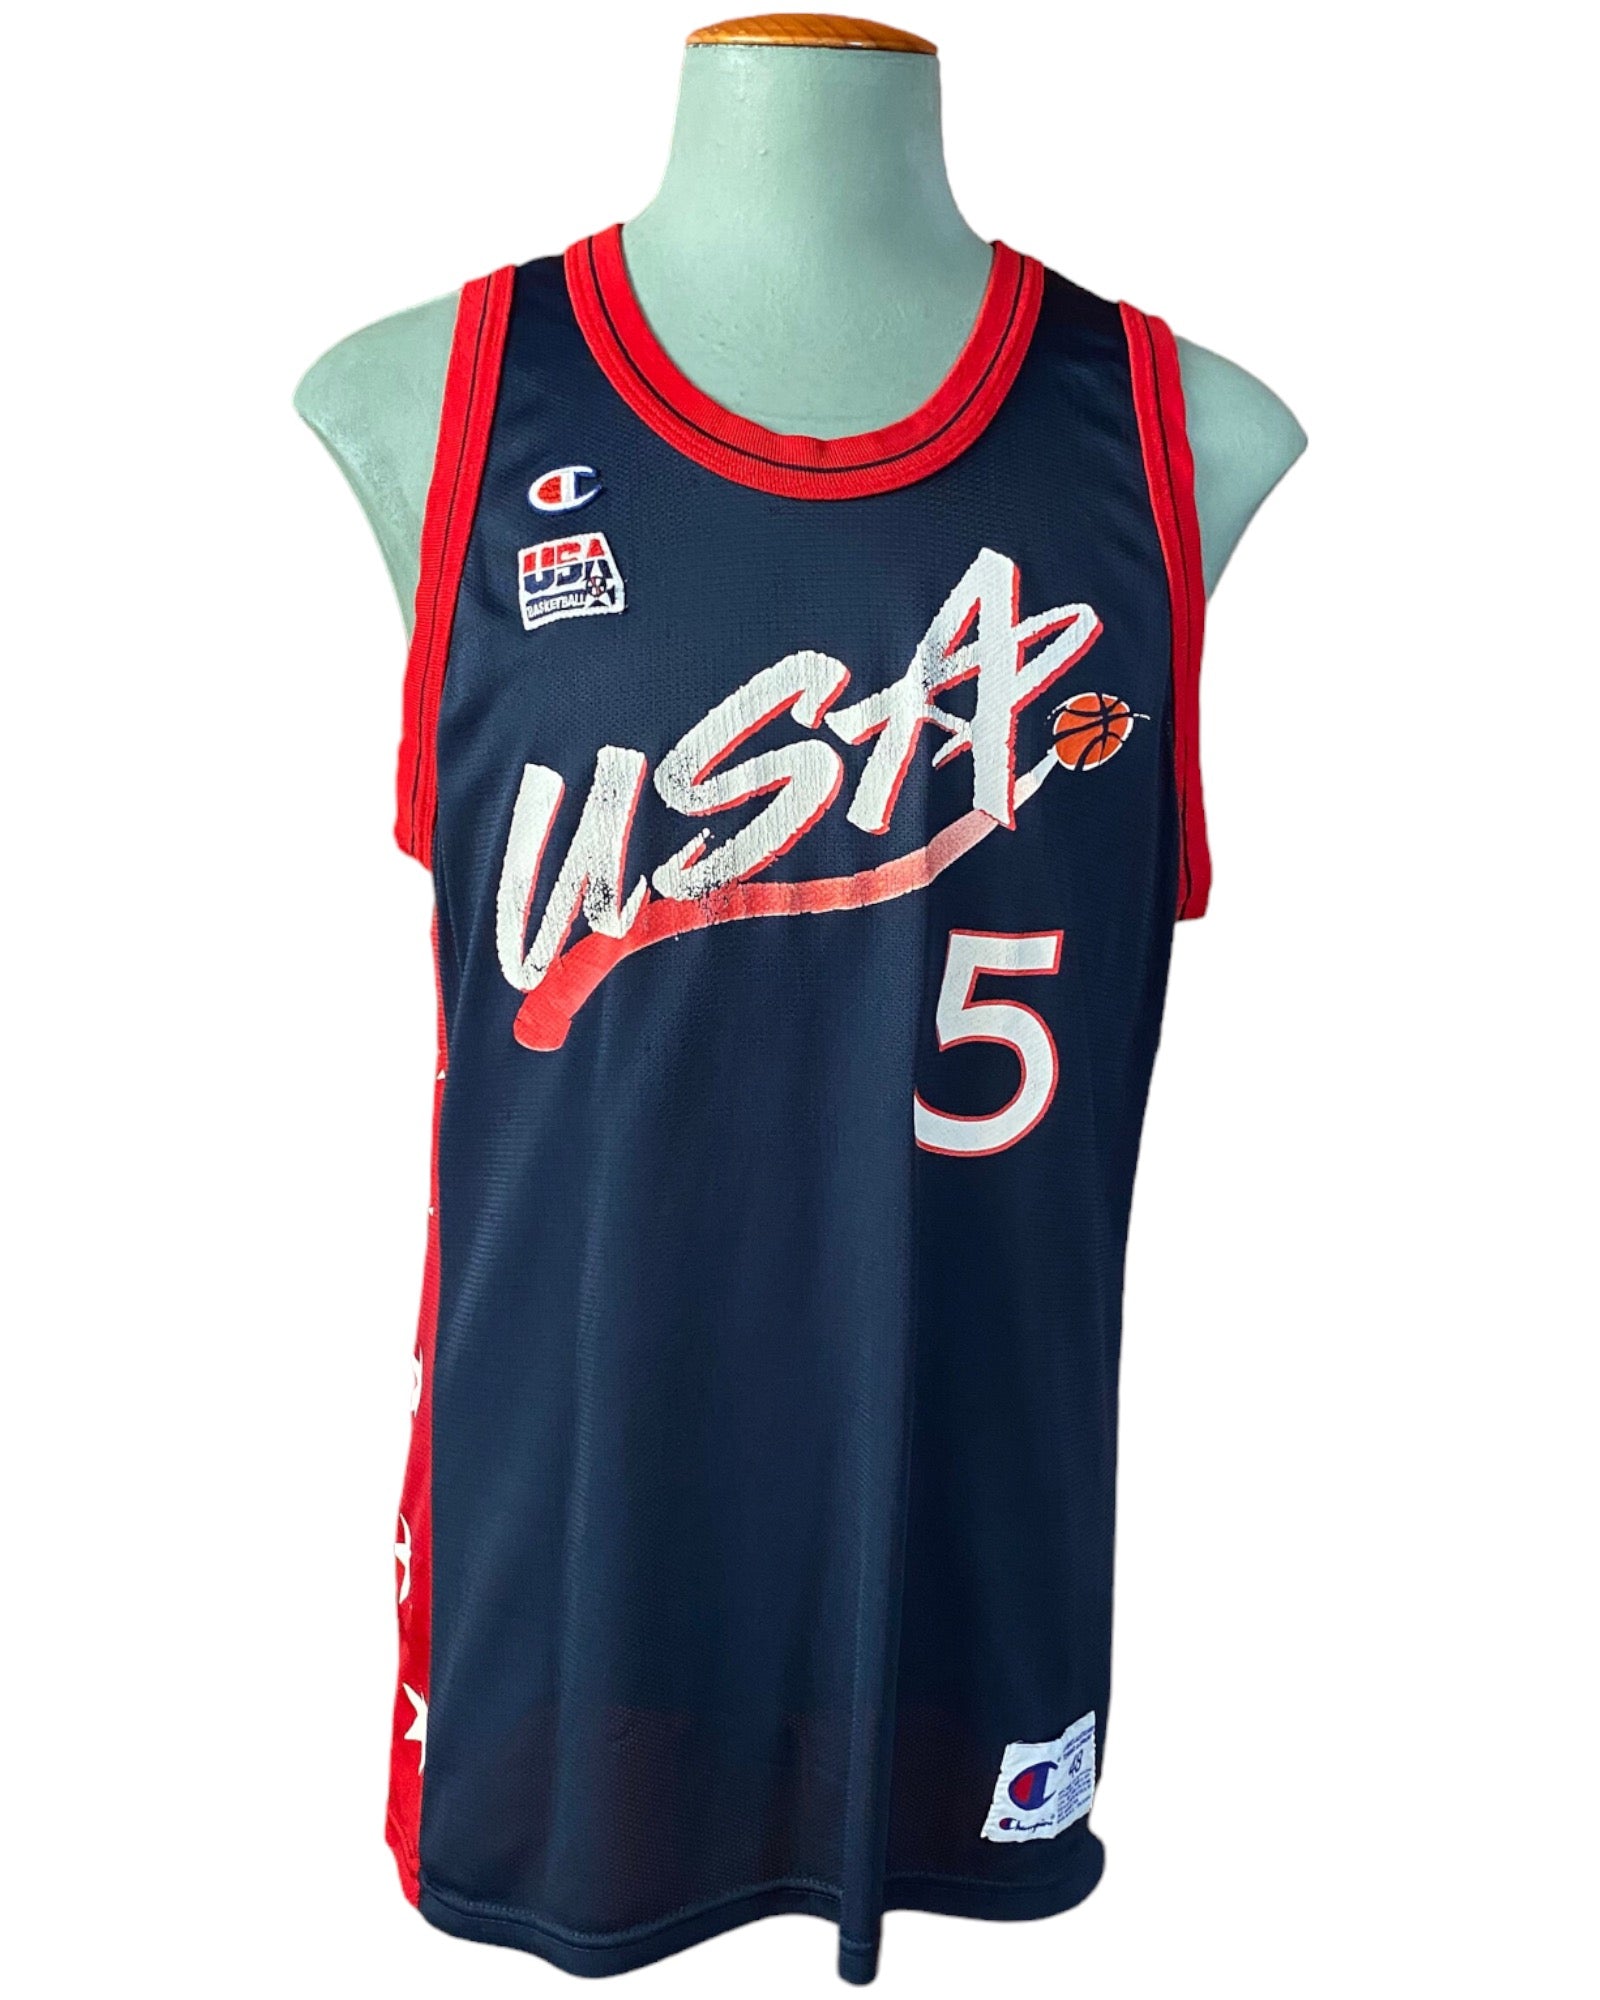 Vintage 90s USA Team Champion NBA jersey, Size 48, Hill #05